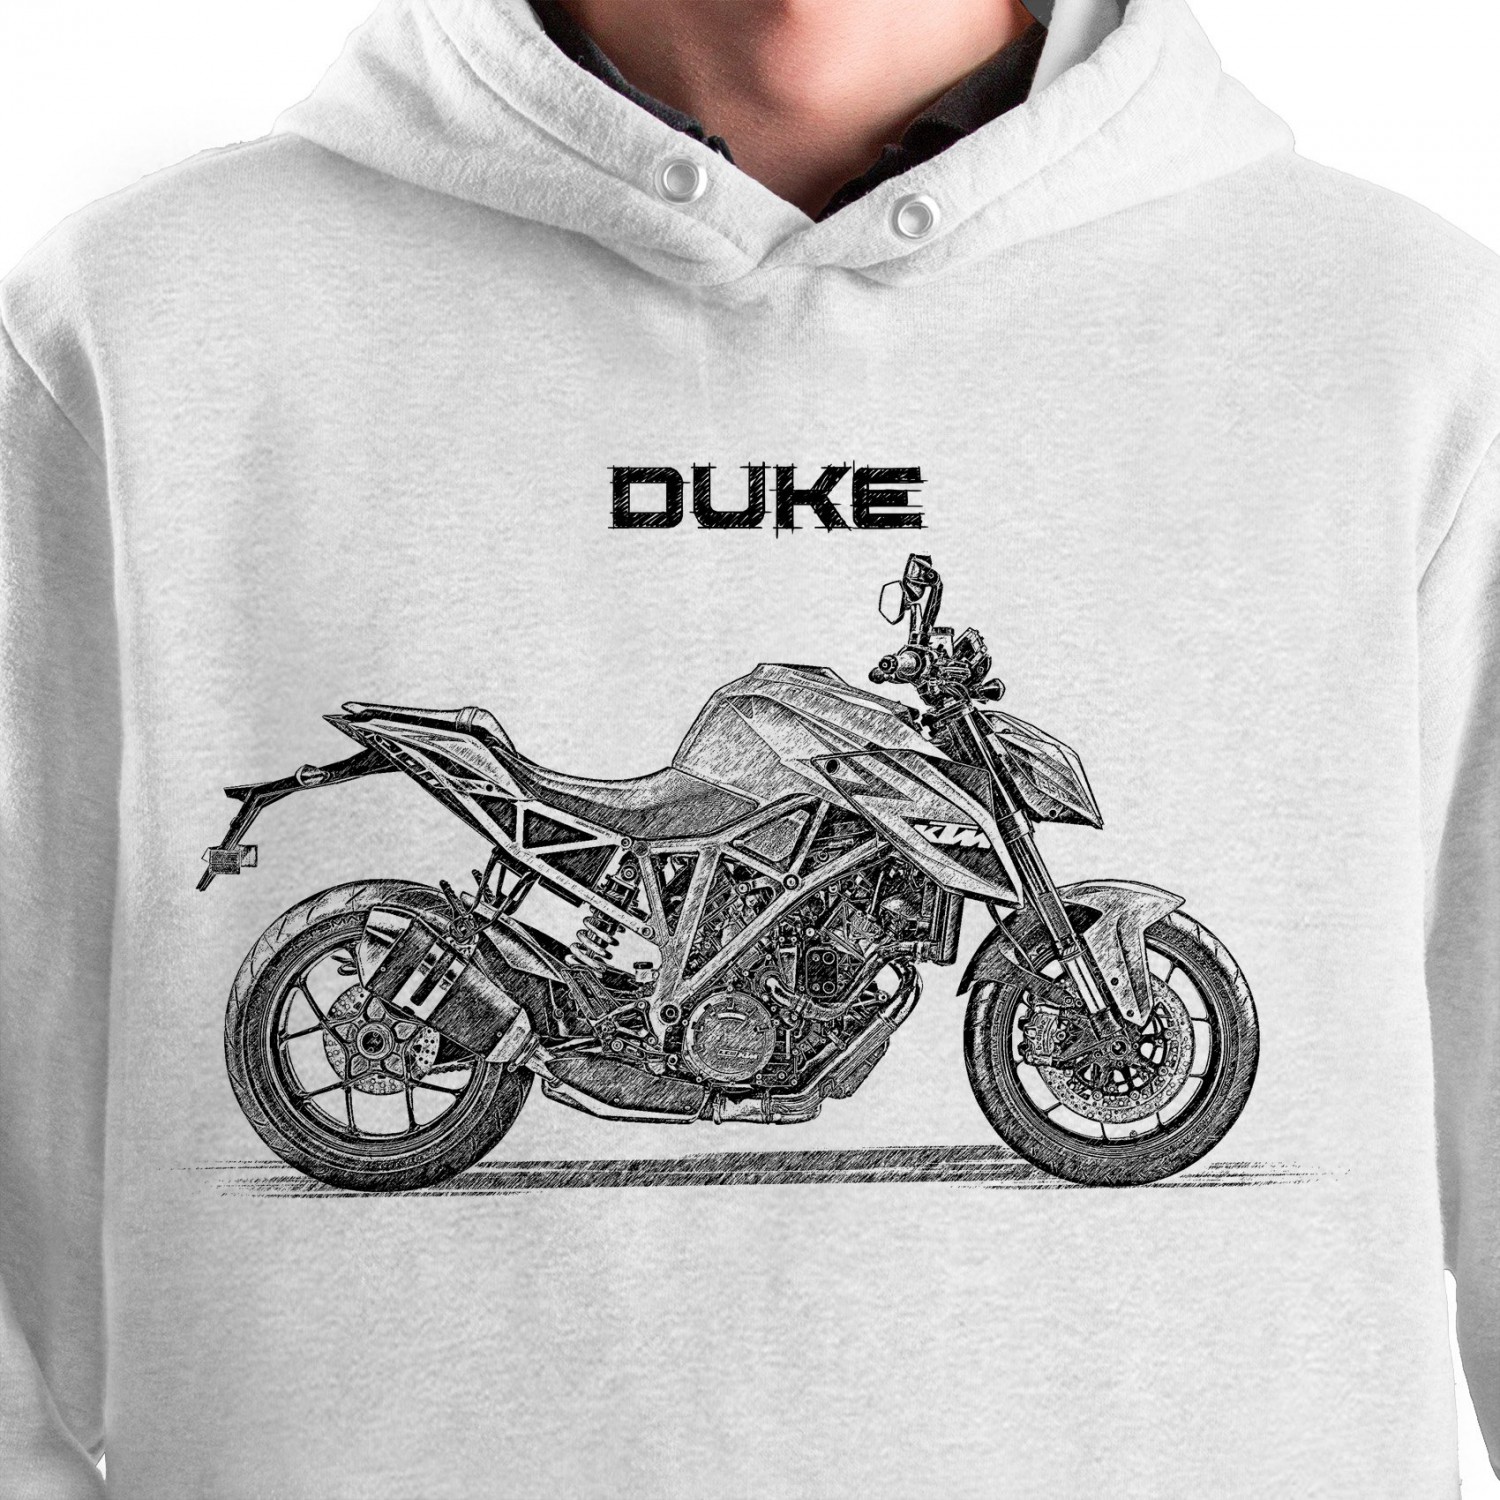 White T-shirt with KTM 1290 Super Duke R. Gift for motorcyclist.